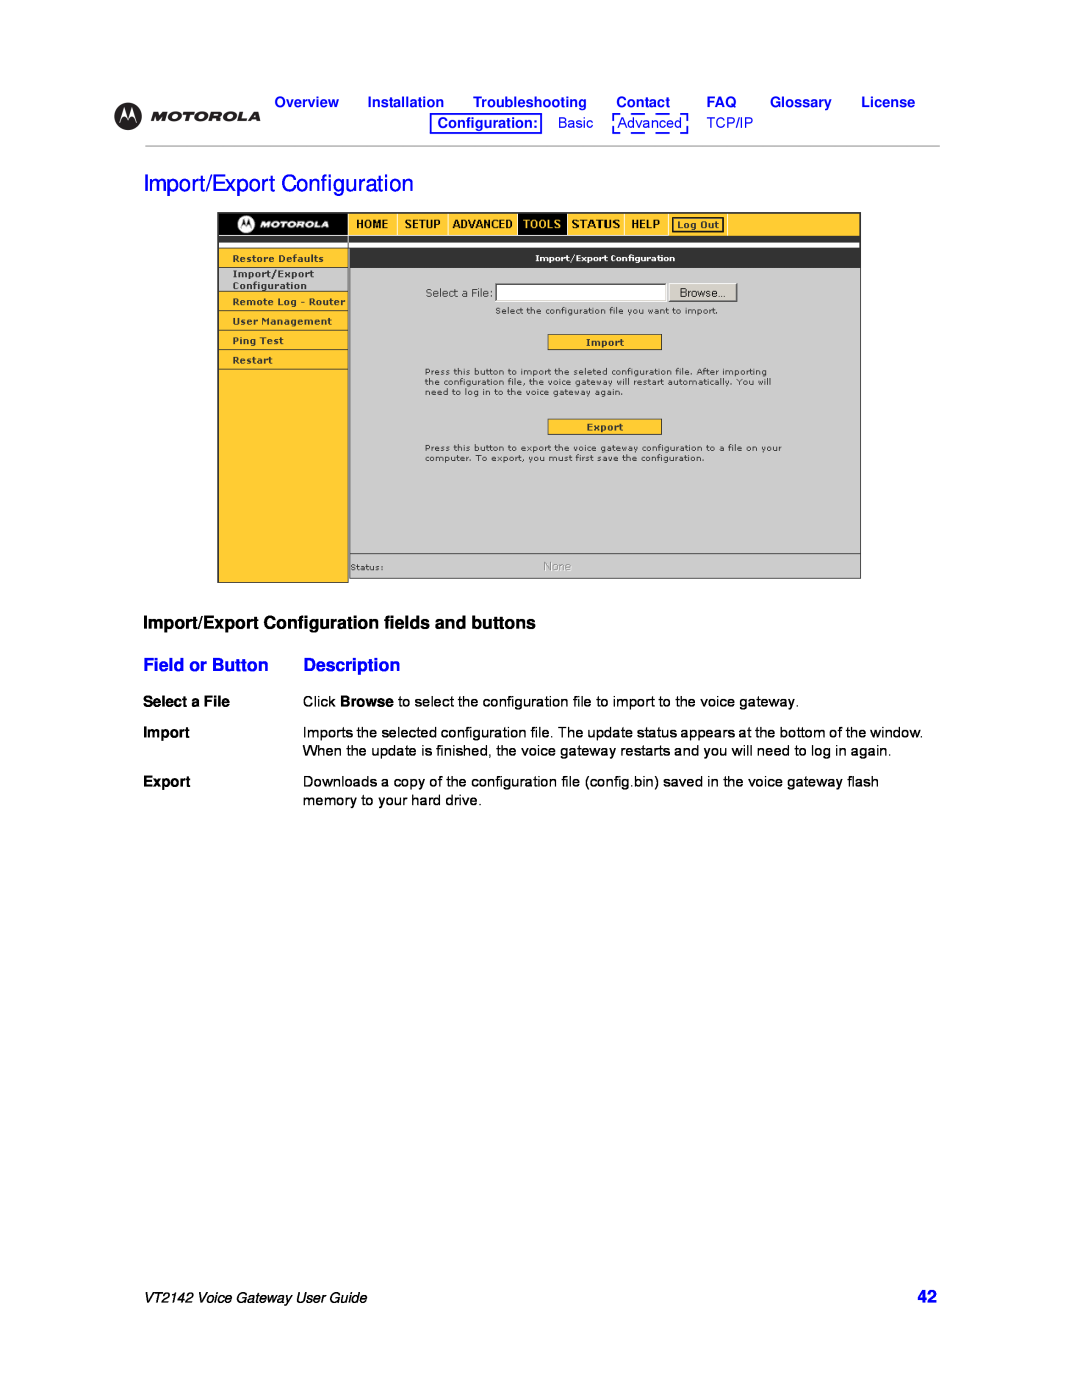 Motorola VT2142 manual Import/Export Configuration fields and buttons, Field or Button, Description 